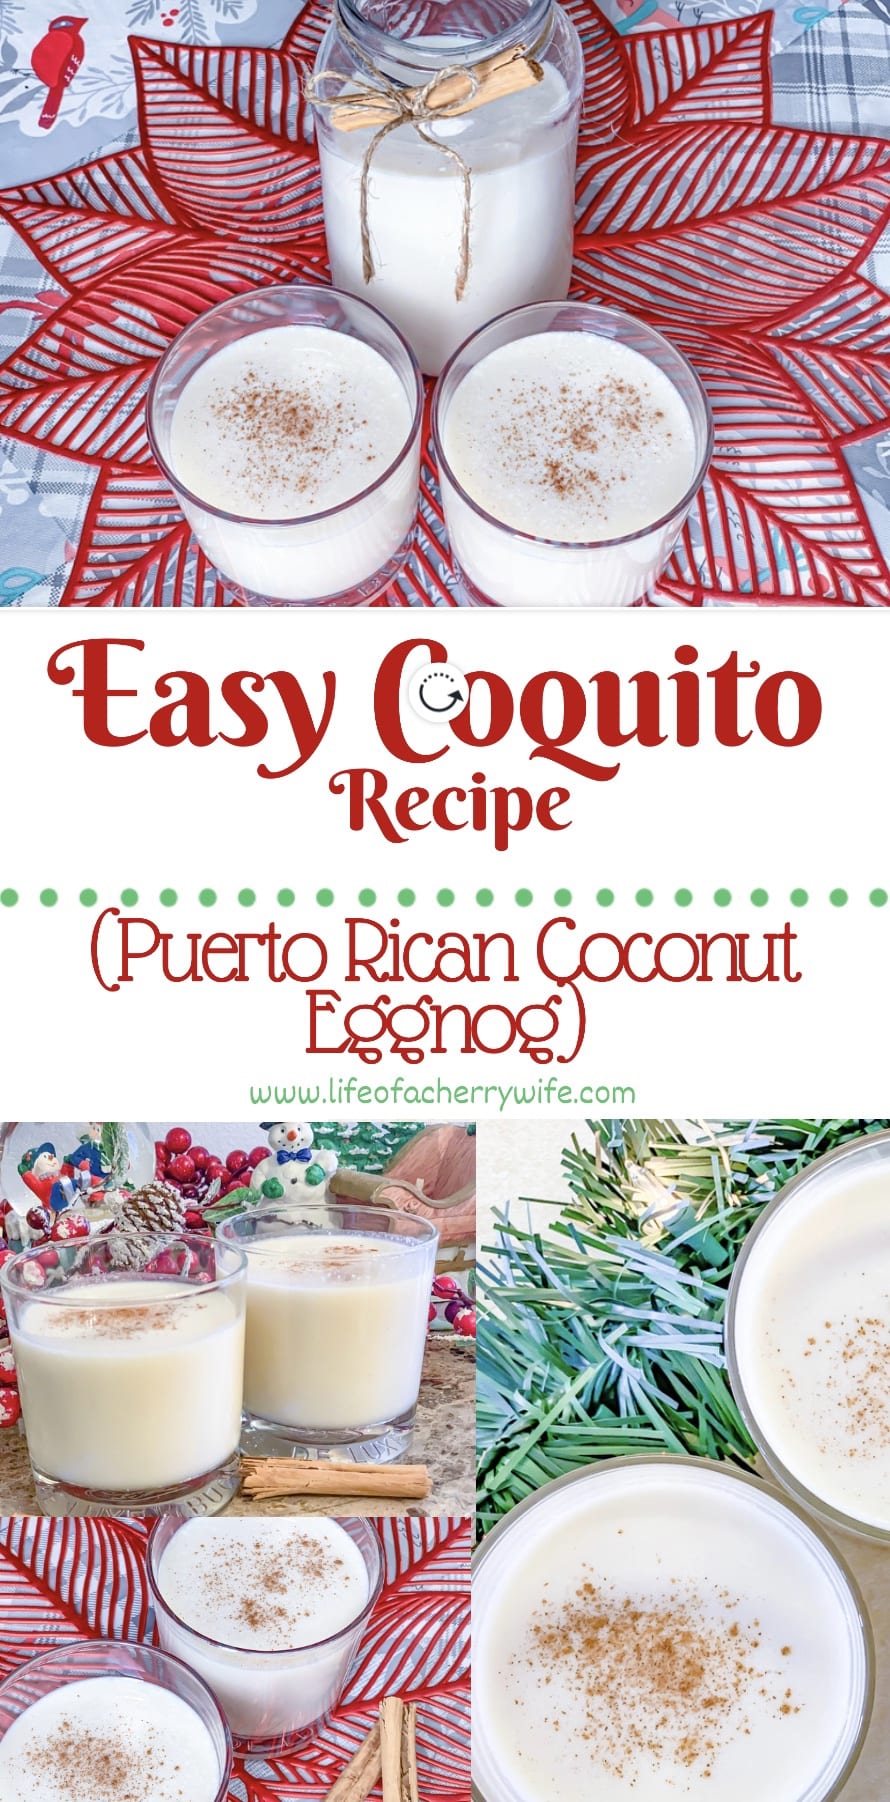 Coquito (Puerto Rican Coconut Eggnog)